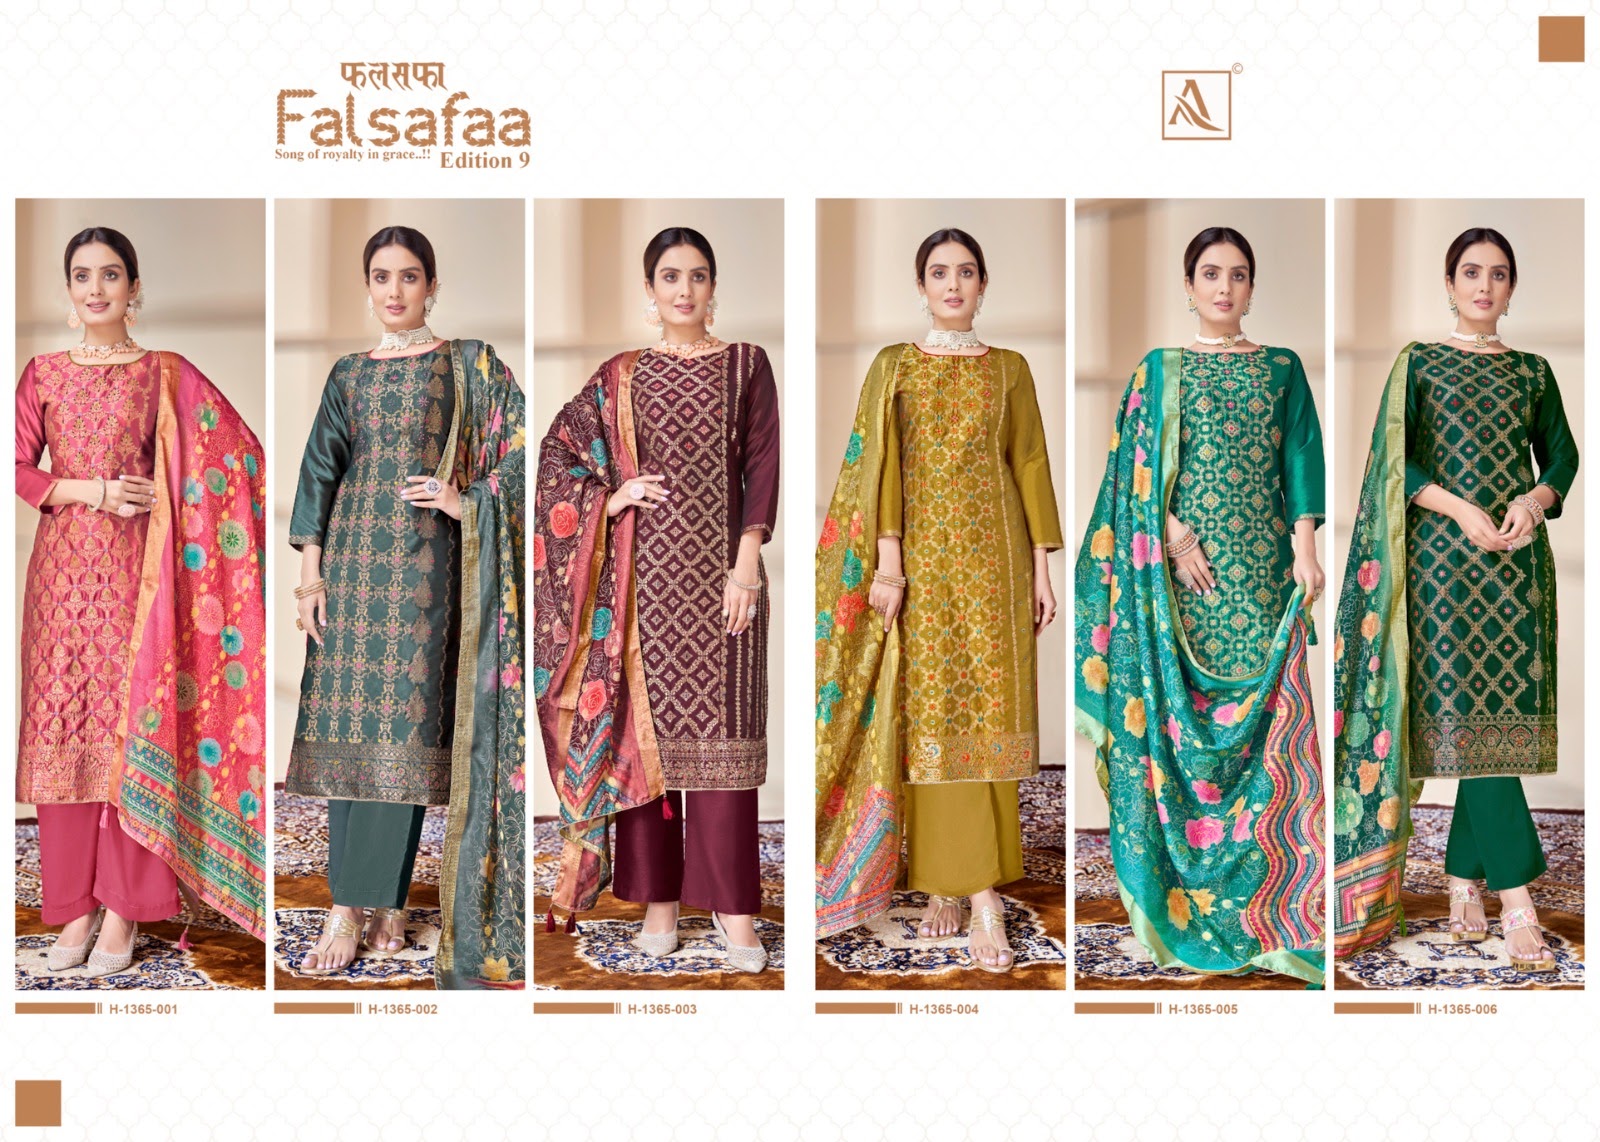 Falsafaa Edition 9 Alok Dola Jacquard Plazzo Style Suits